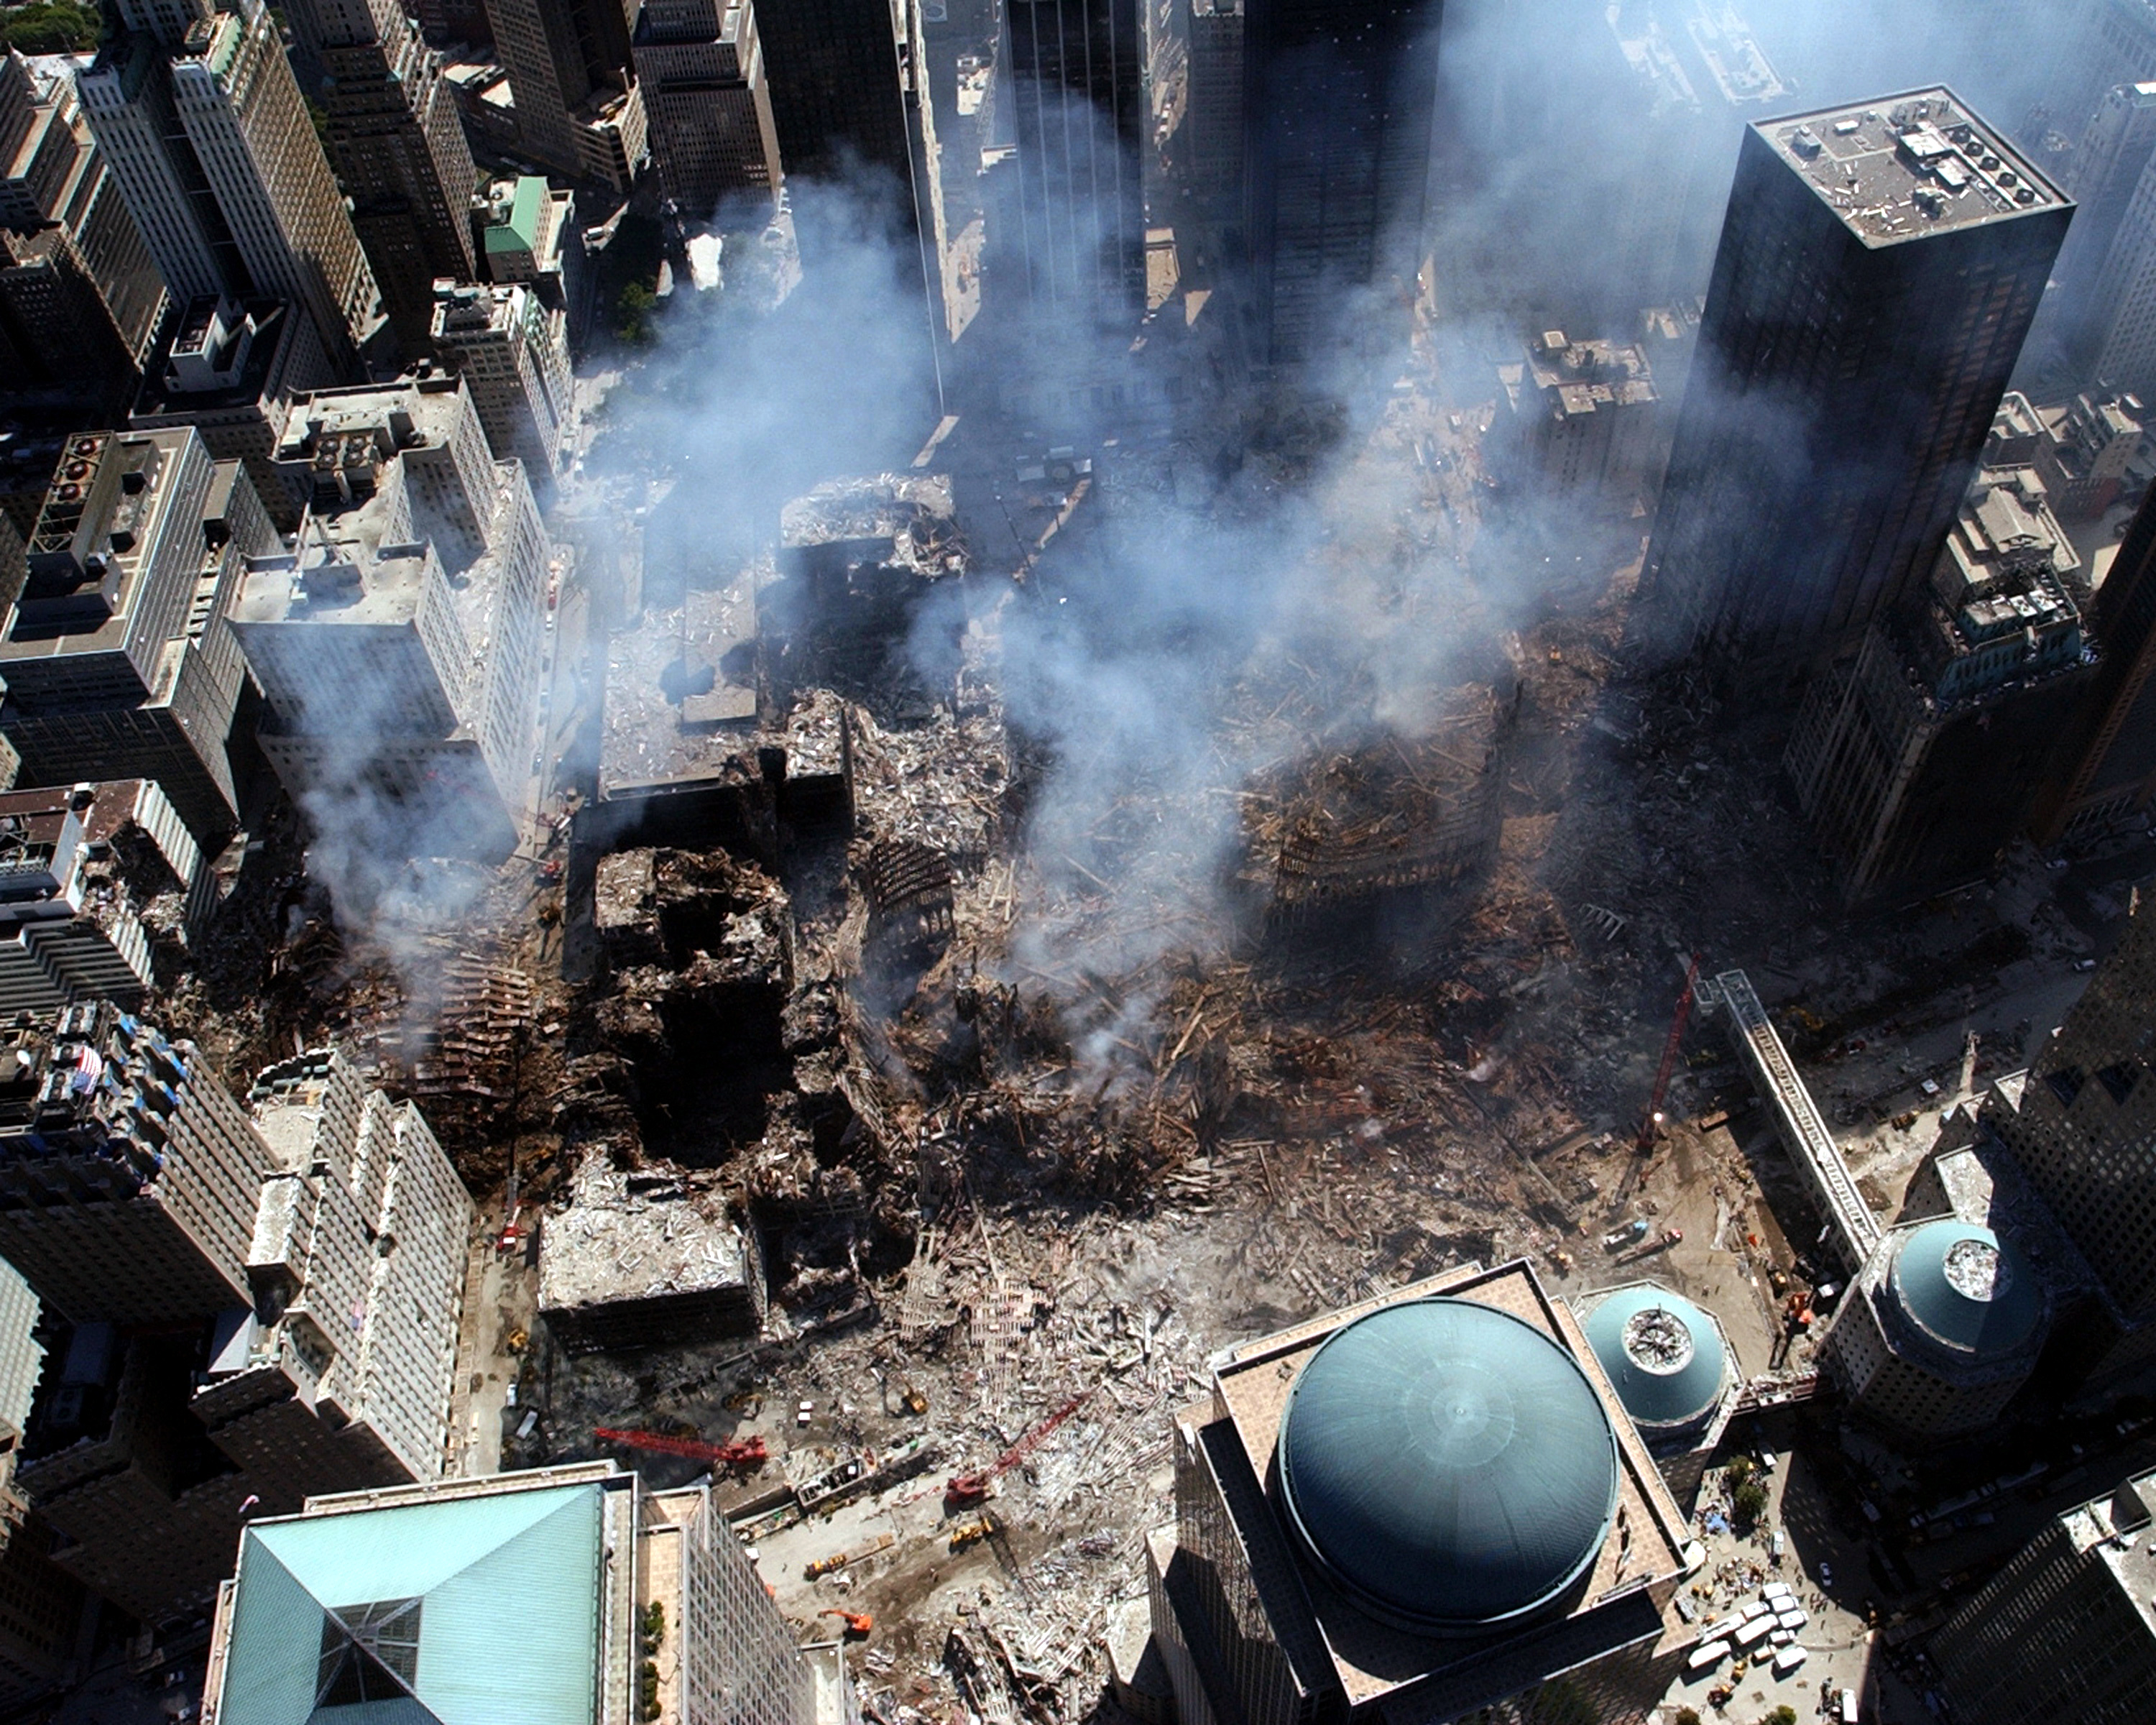 http://upload.wikimedia.org/wikipedia/commons/8/8f/US_Navy_010917-N-7479T-508_World_Trade_Center_collapse.jpg